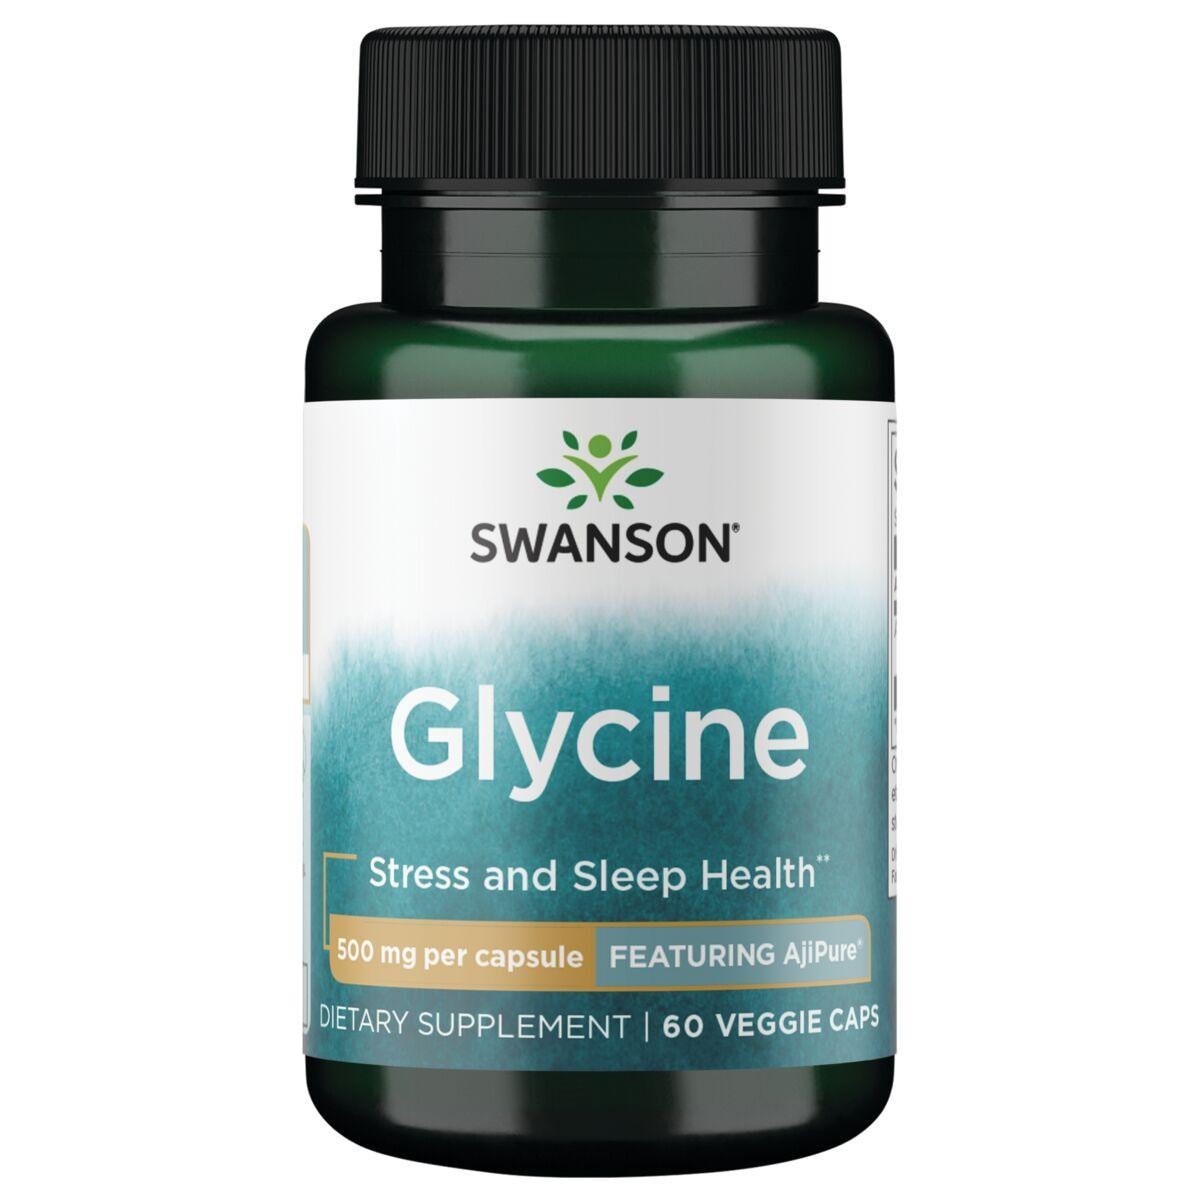 Swanson Ultra Glycine - Featuring Ajipure Supplement Vitamin | 500 mg | 60 Veg Caps